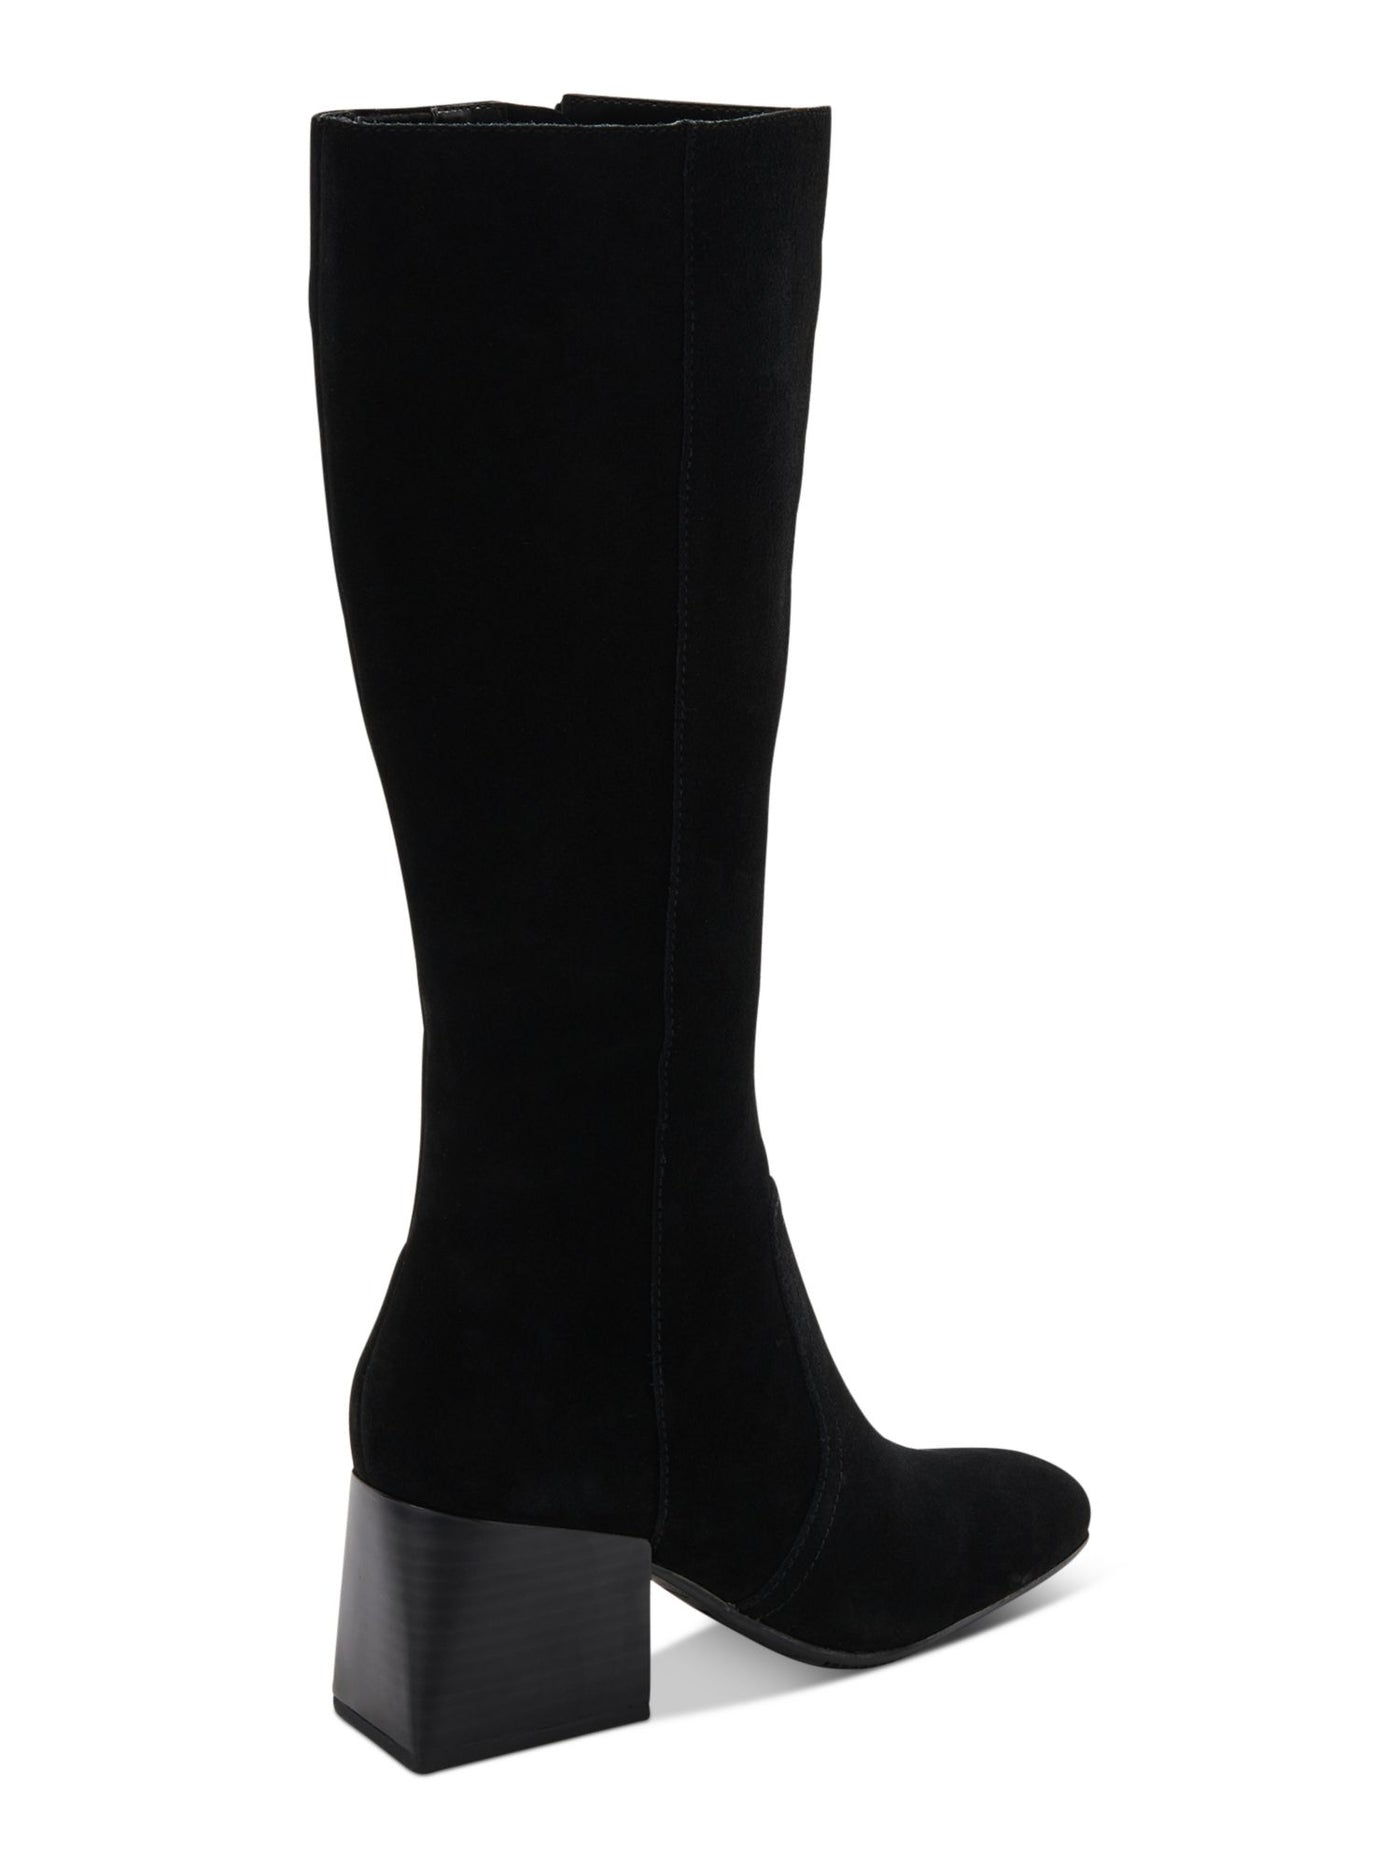 AQUA COLLEGE Womens Black Goring Cushioned Waterproof Tori Square Toe Stacked Heel Zip-Up Dress Boots Shoes 7 M